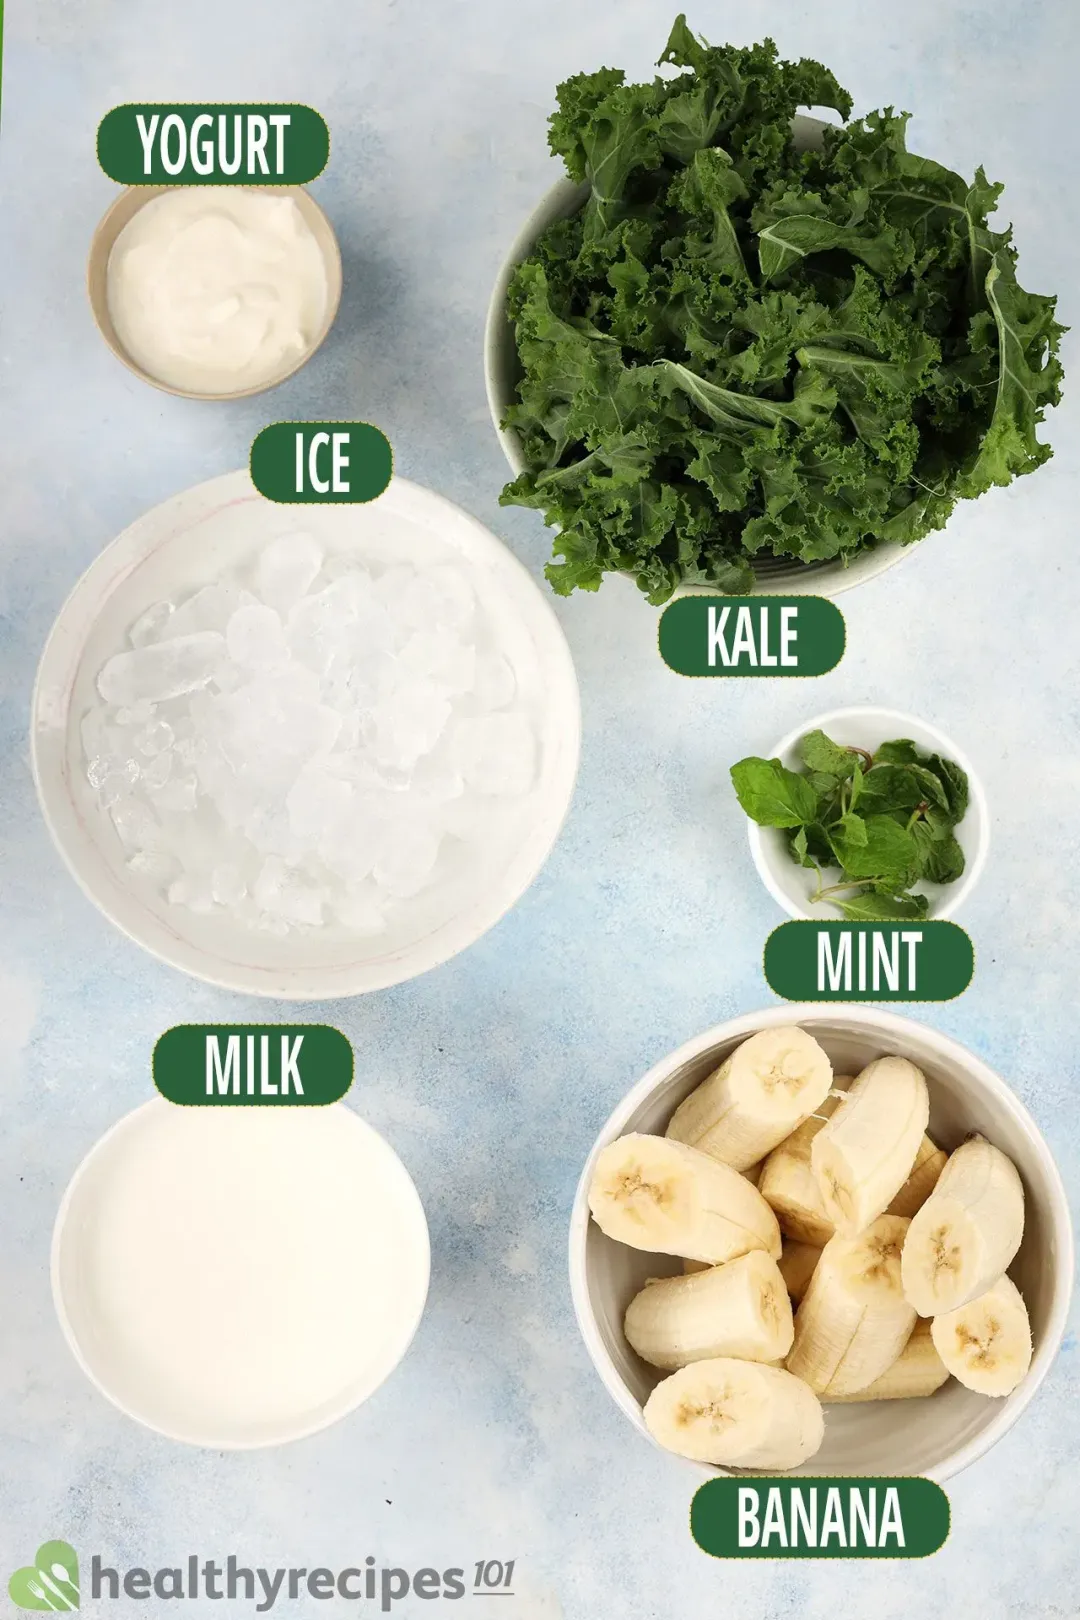 Ingredients for Kale Banana Smoothie